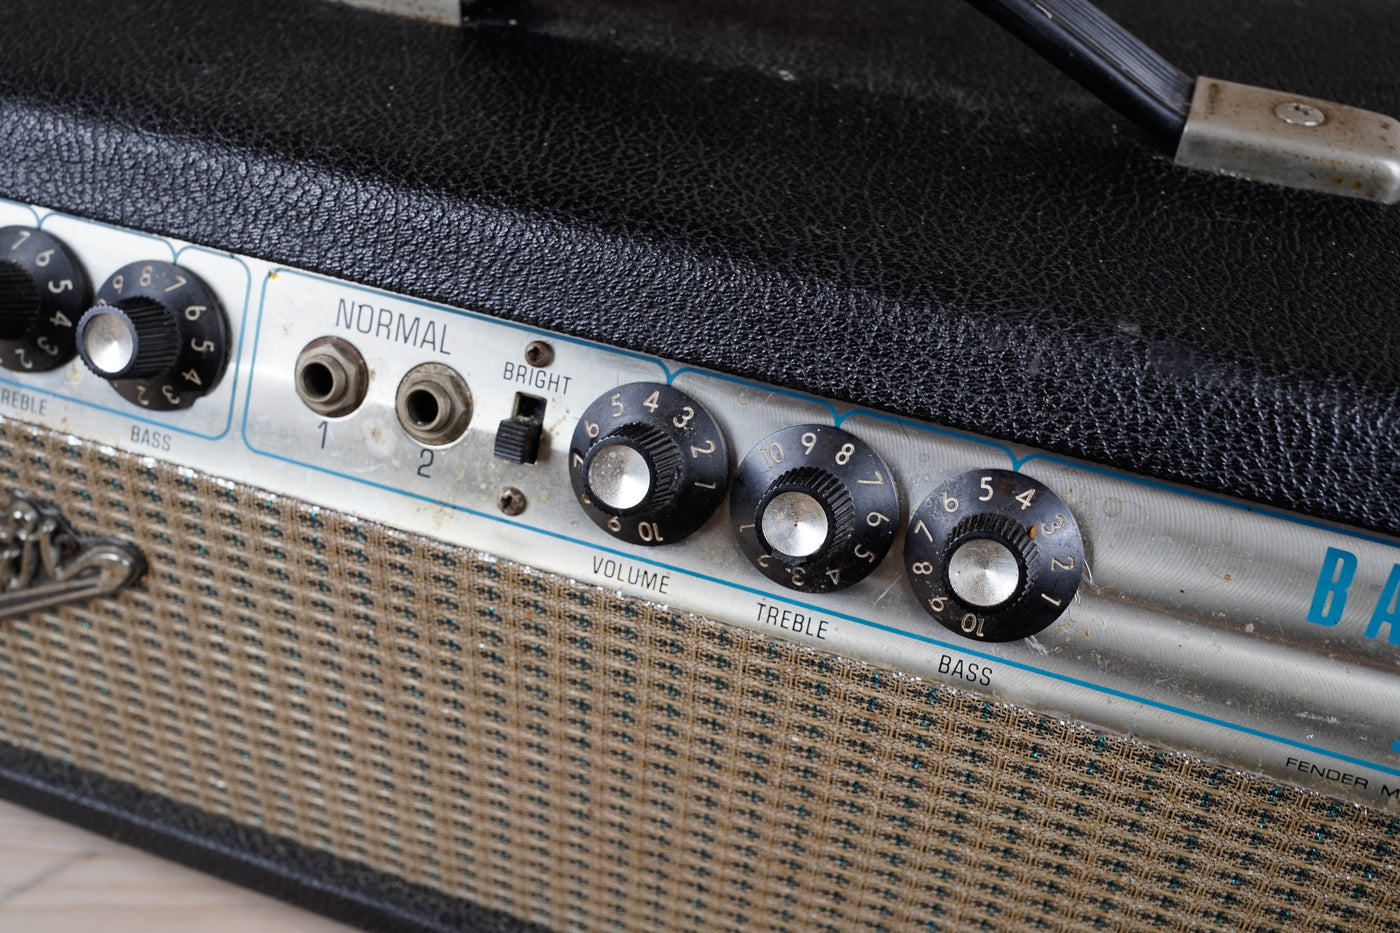 Fender Bassman 50 2-Channel 50-Watt Guitar Amp Head 1976 Silverface Vintage Tube Amplifier - 3 Prong